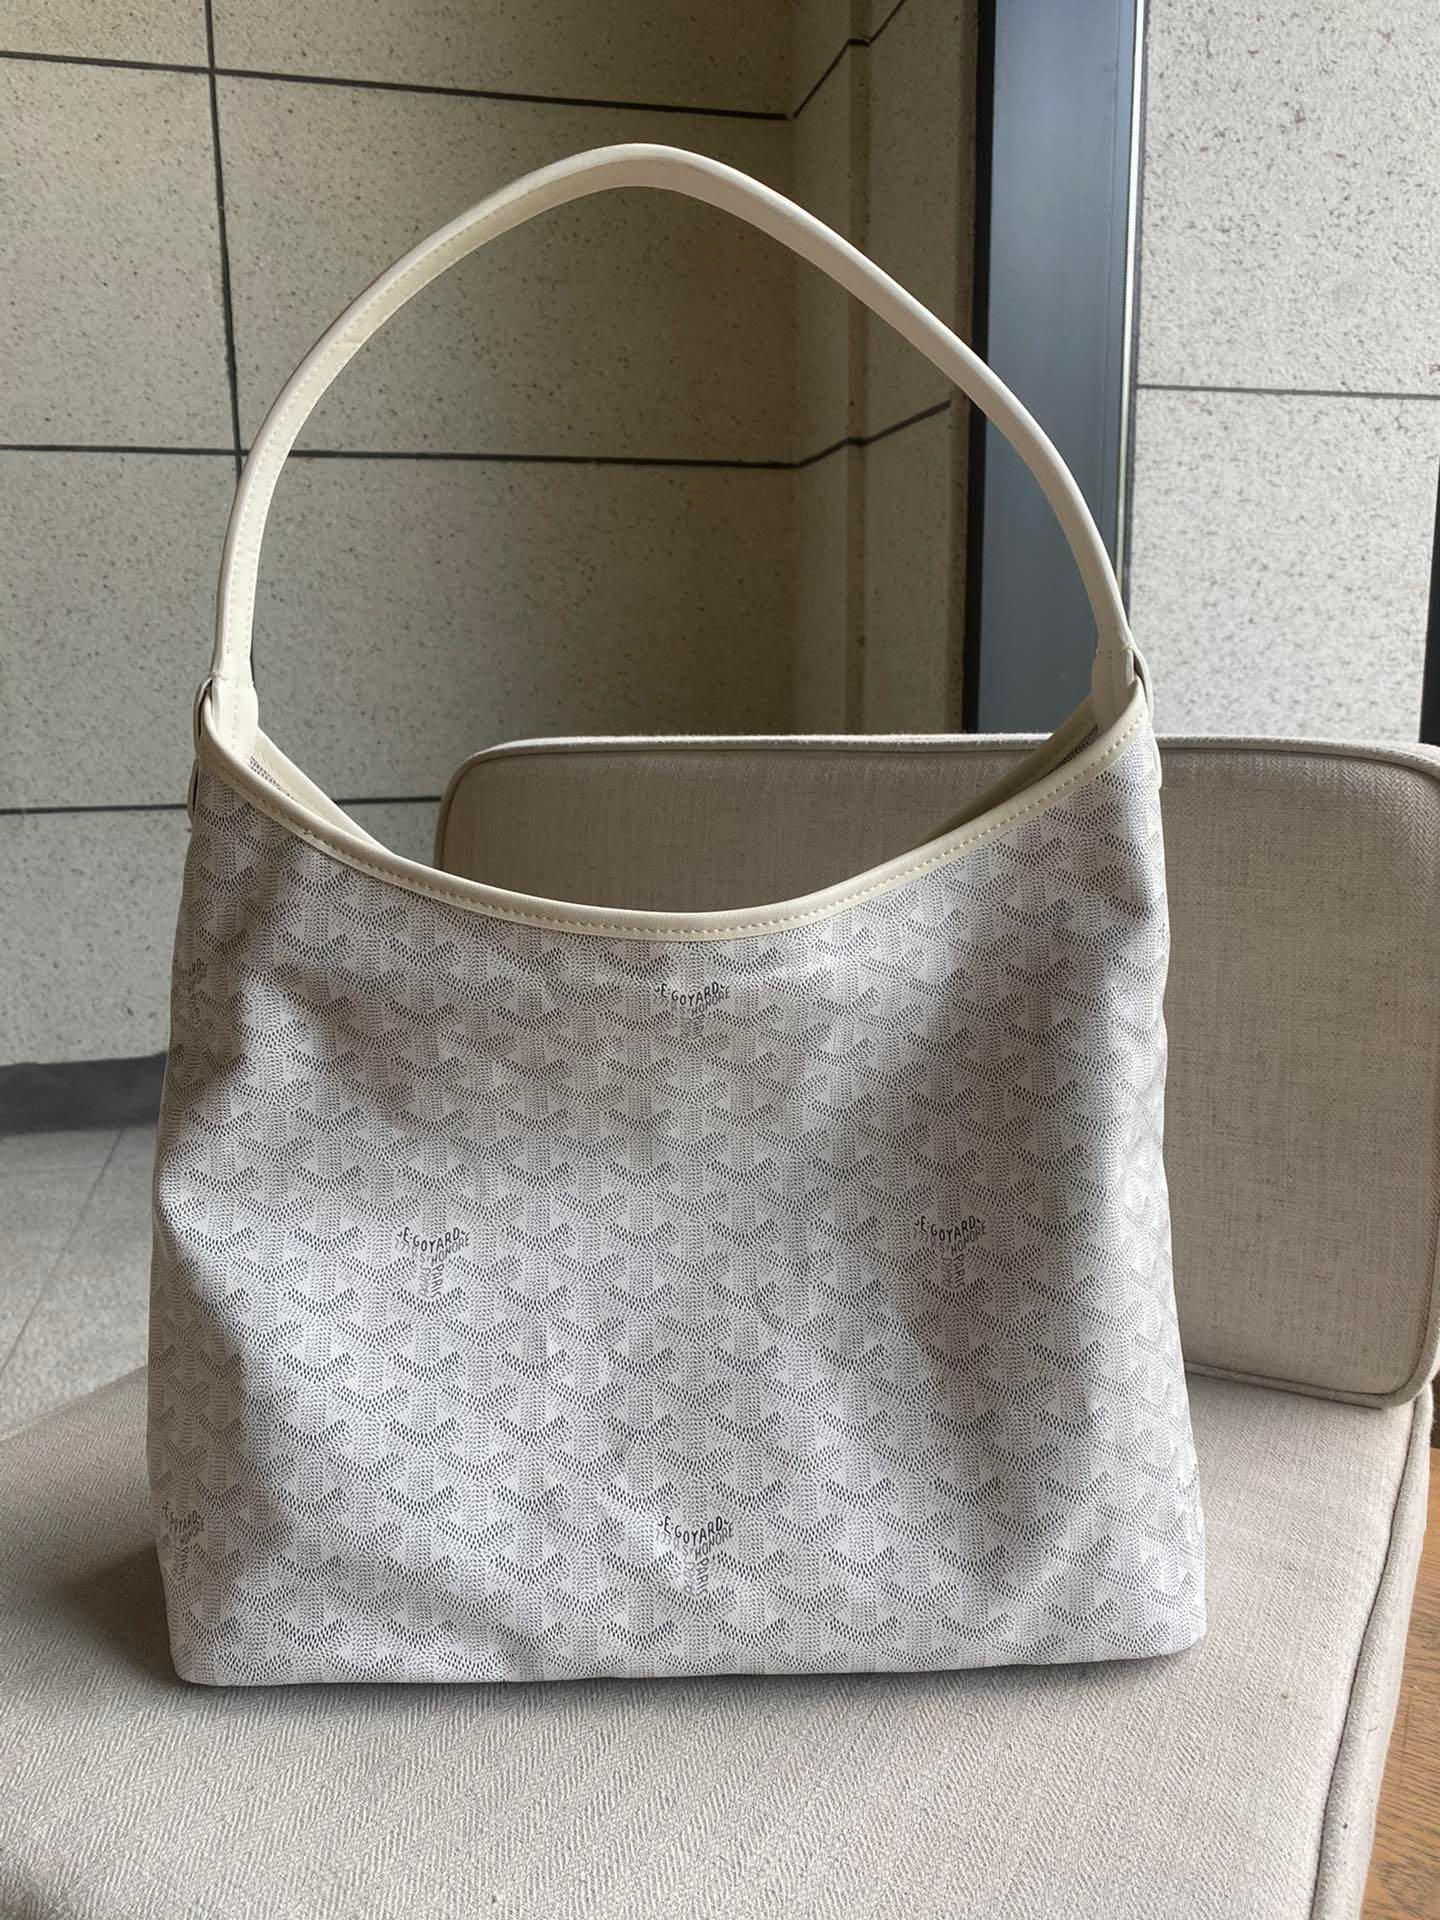 GY Hobo Tote Shoulder Bag in White Goyard🤍, Women's Fashion, Bags